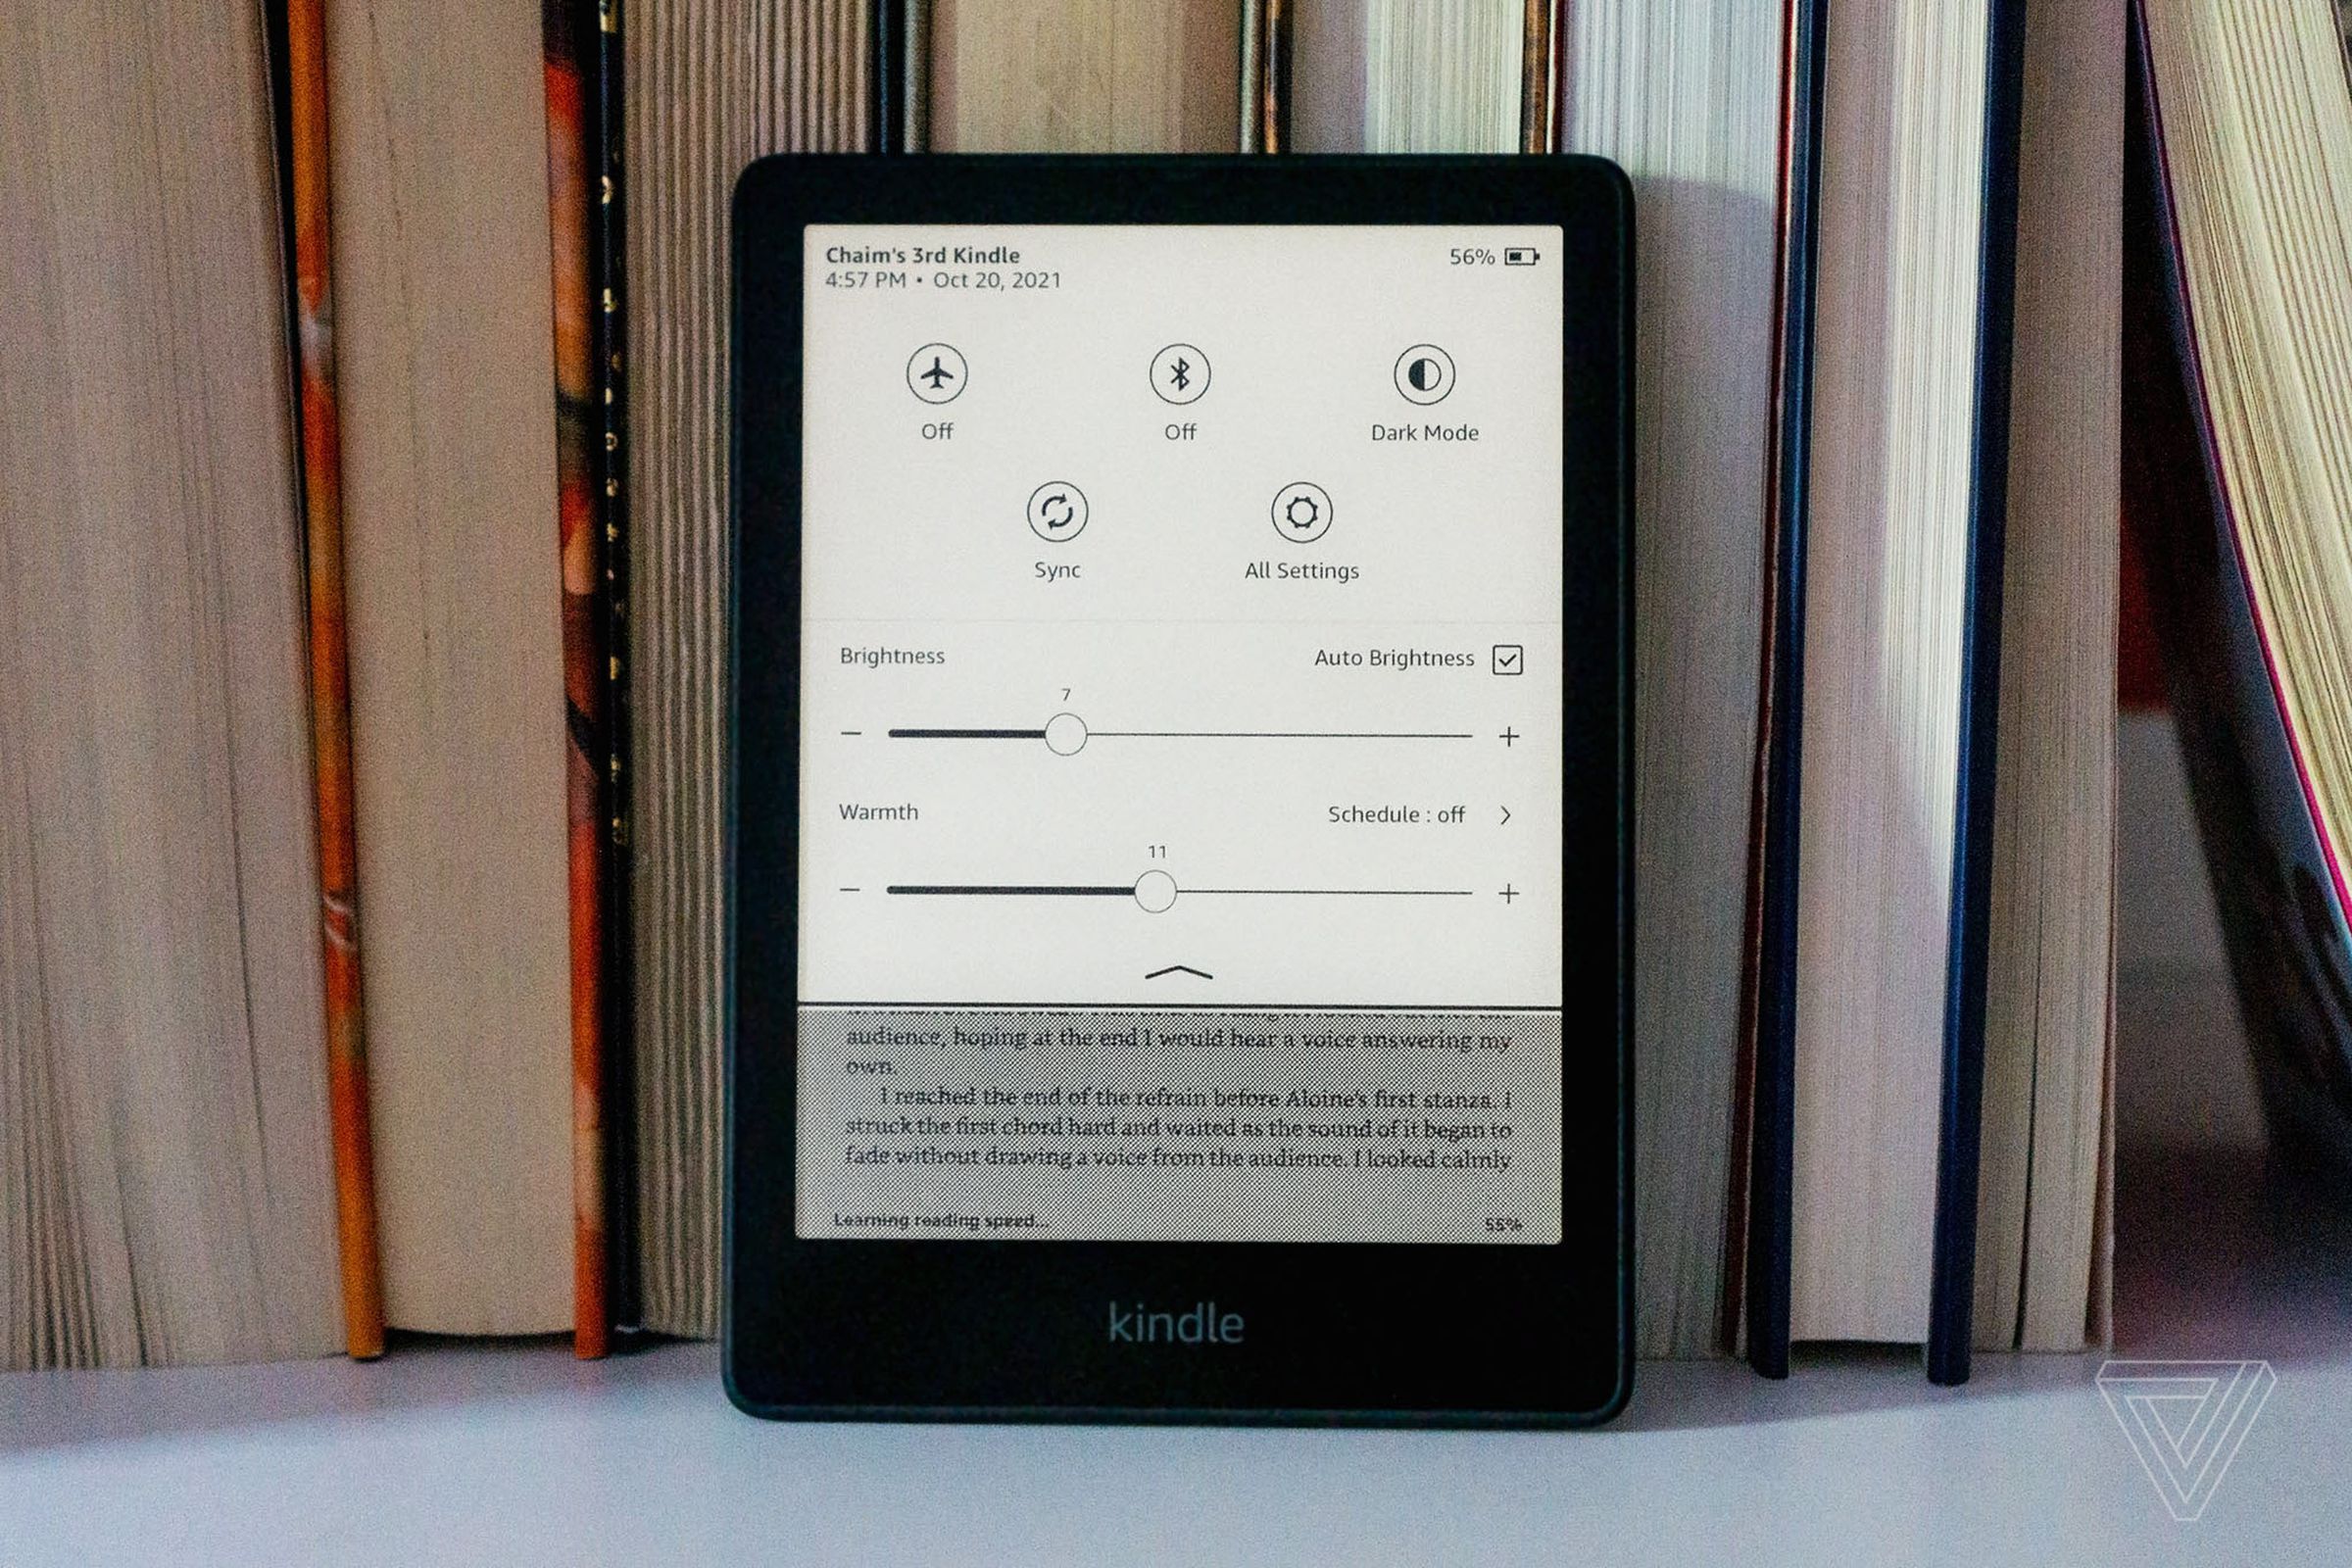 The Kindle now has a smartphone-style swipe-down settings menu.